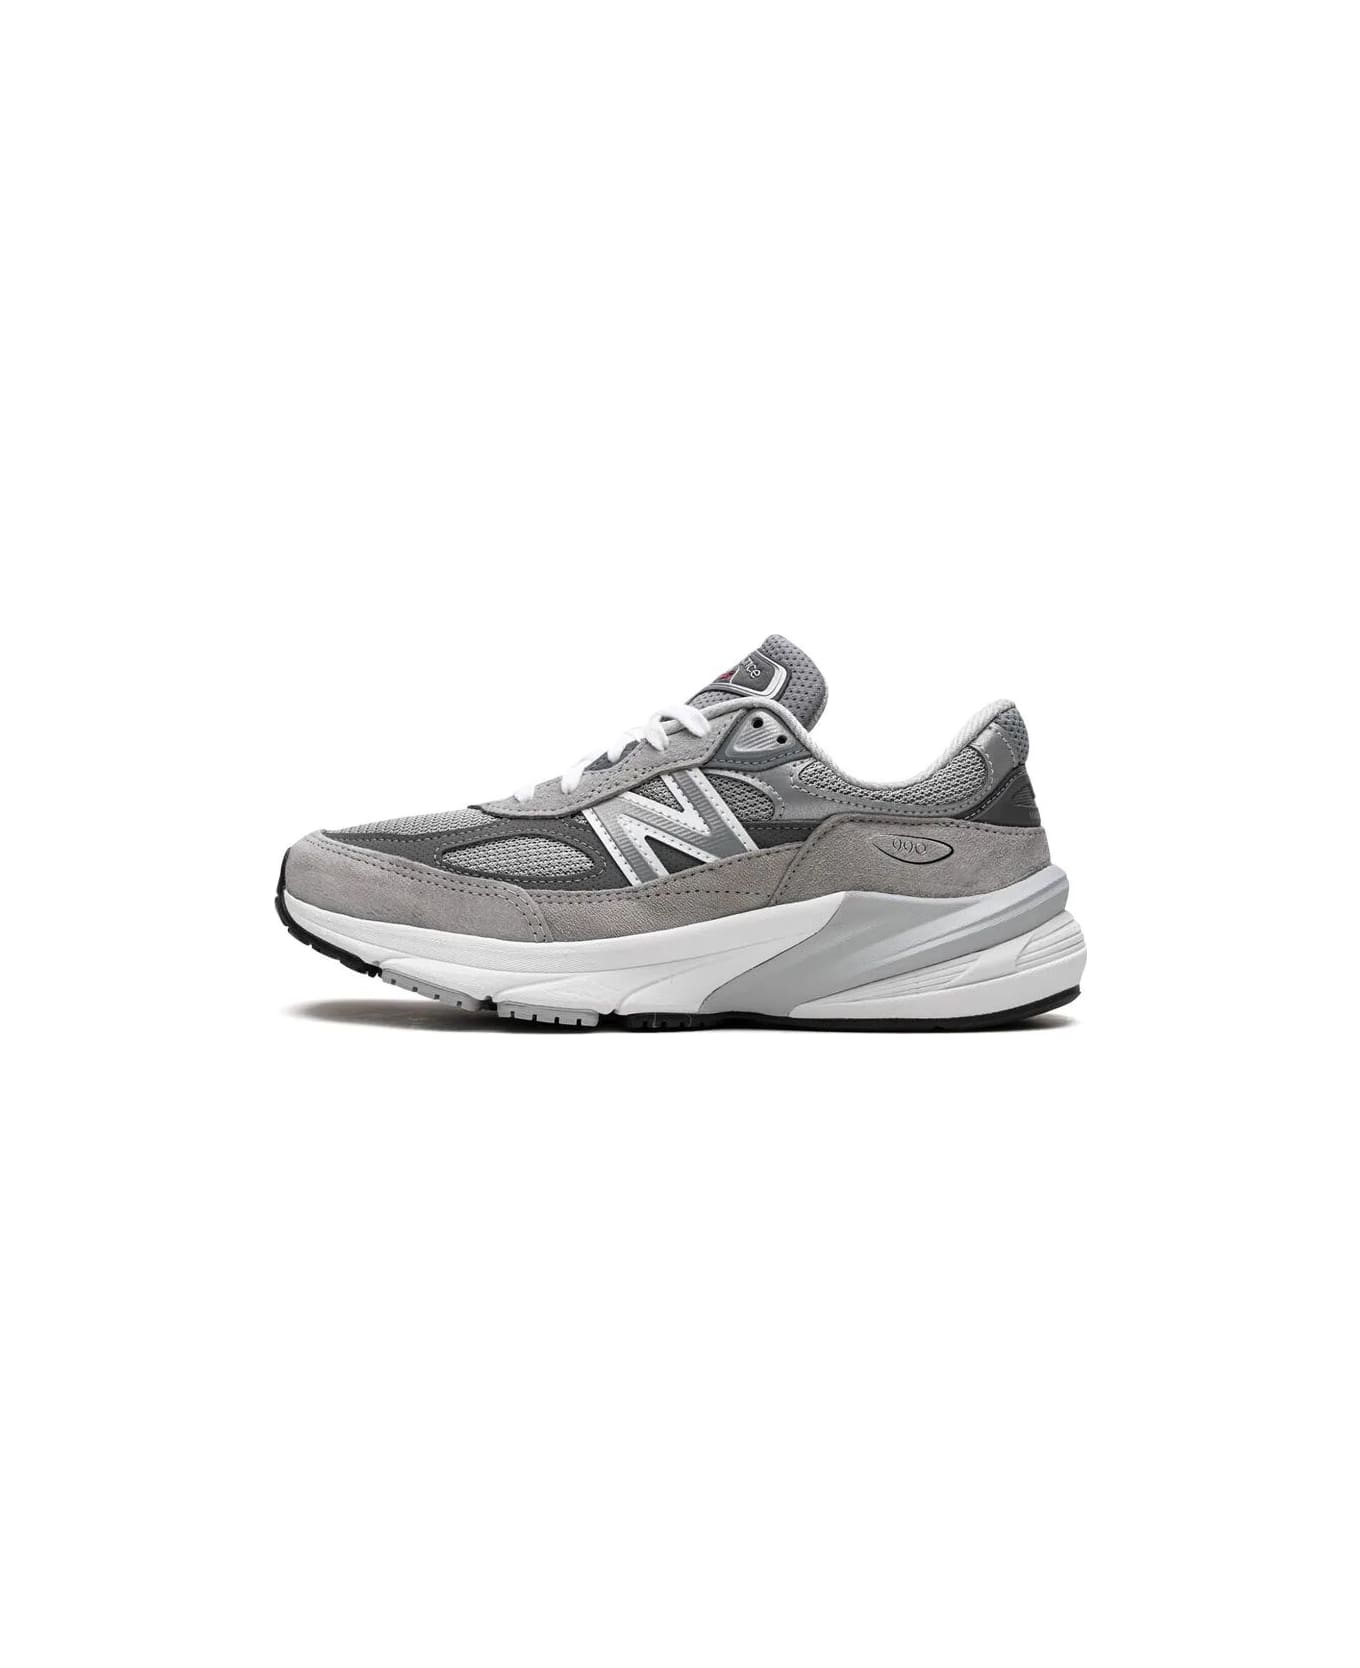 New Balance 990v6 Sneakers - Cool Grey スニーカー